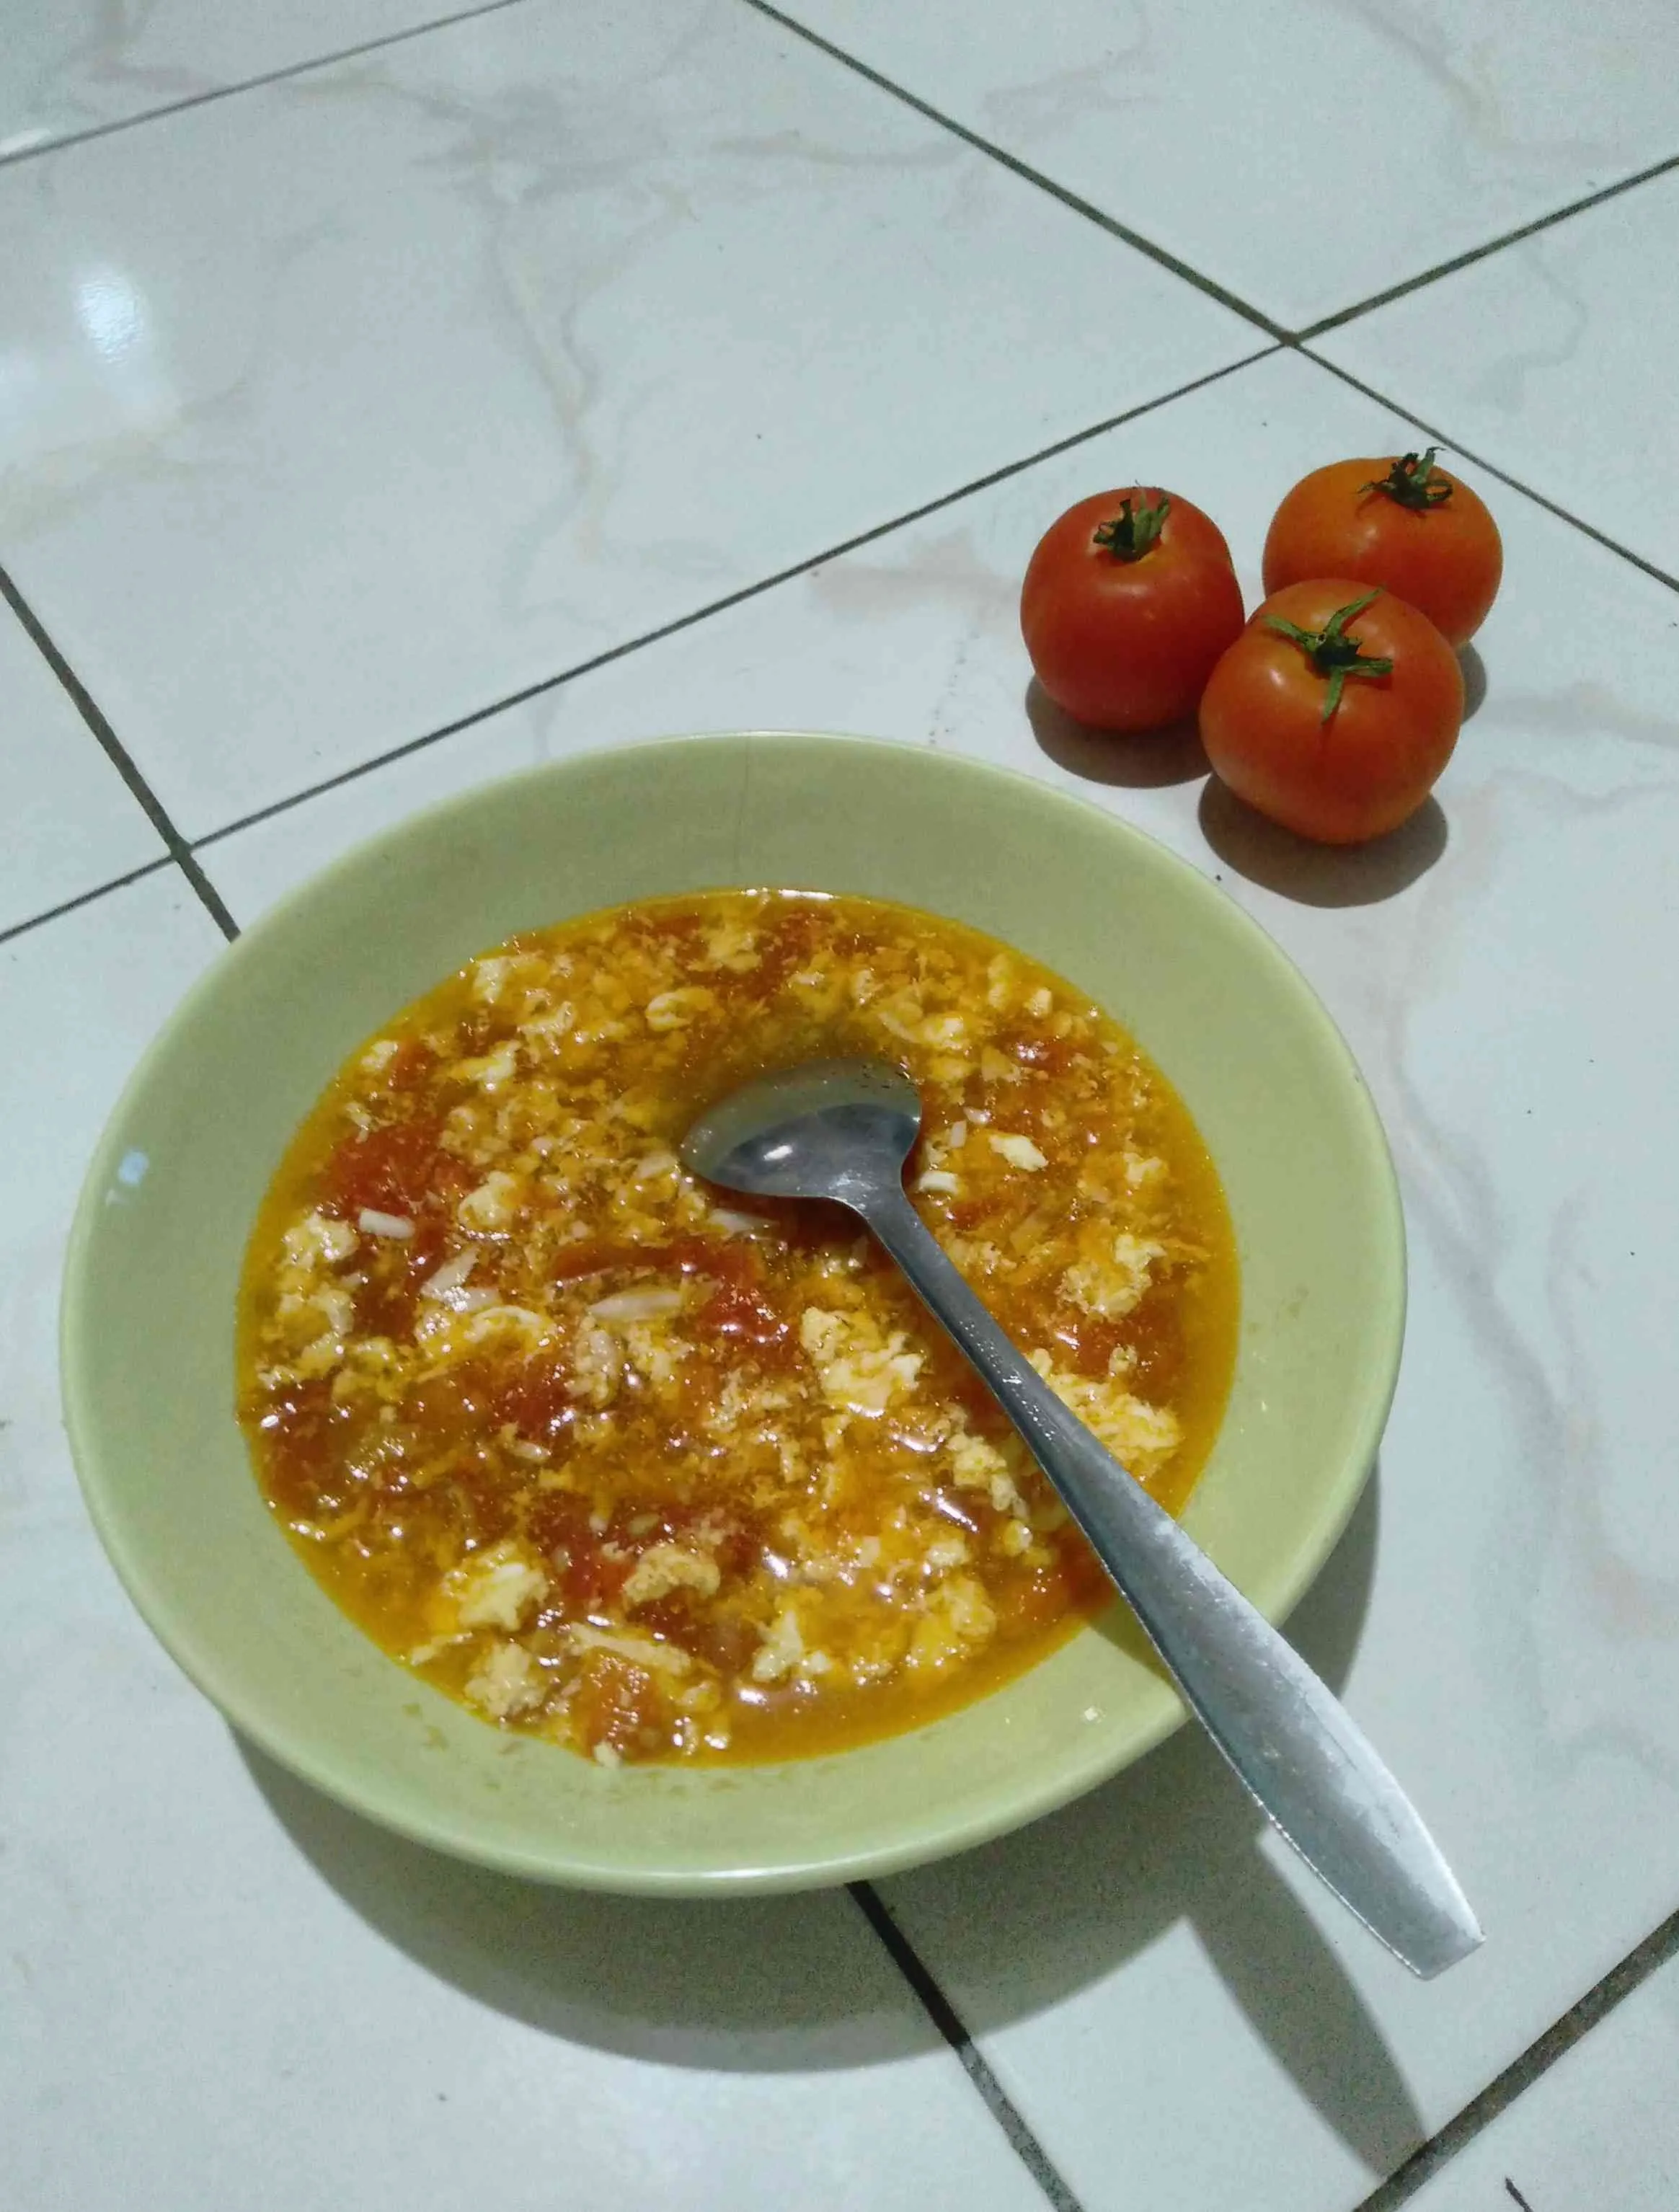 Sup Tomat Telur